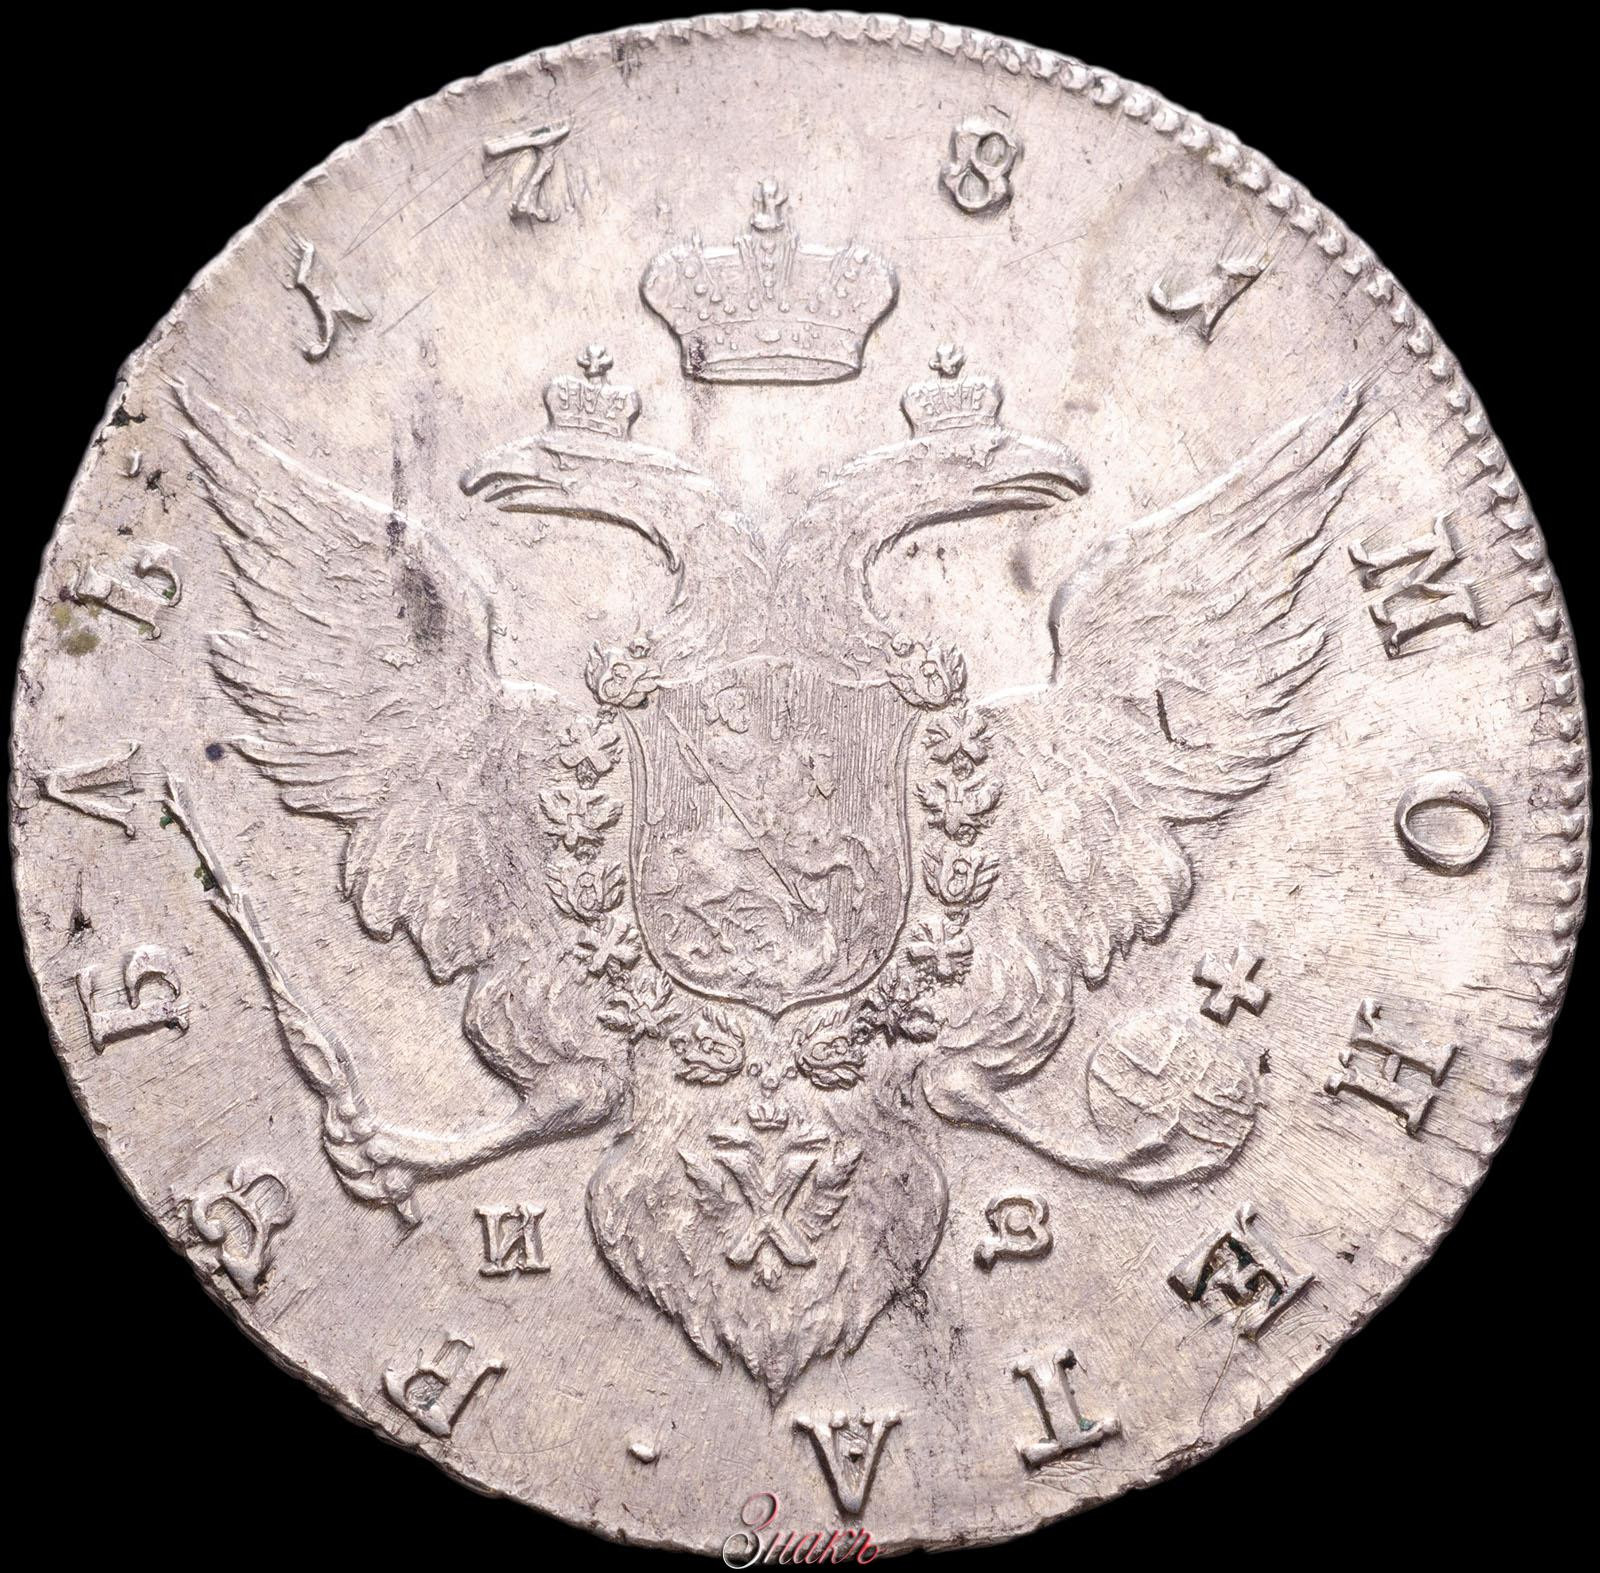 1 рубль 1781 года